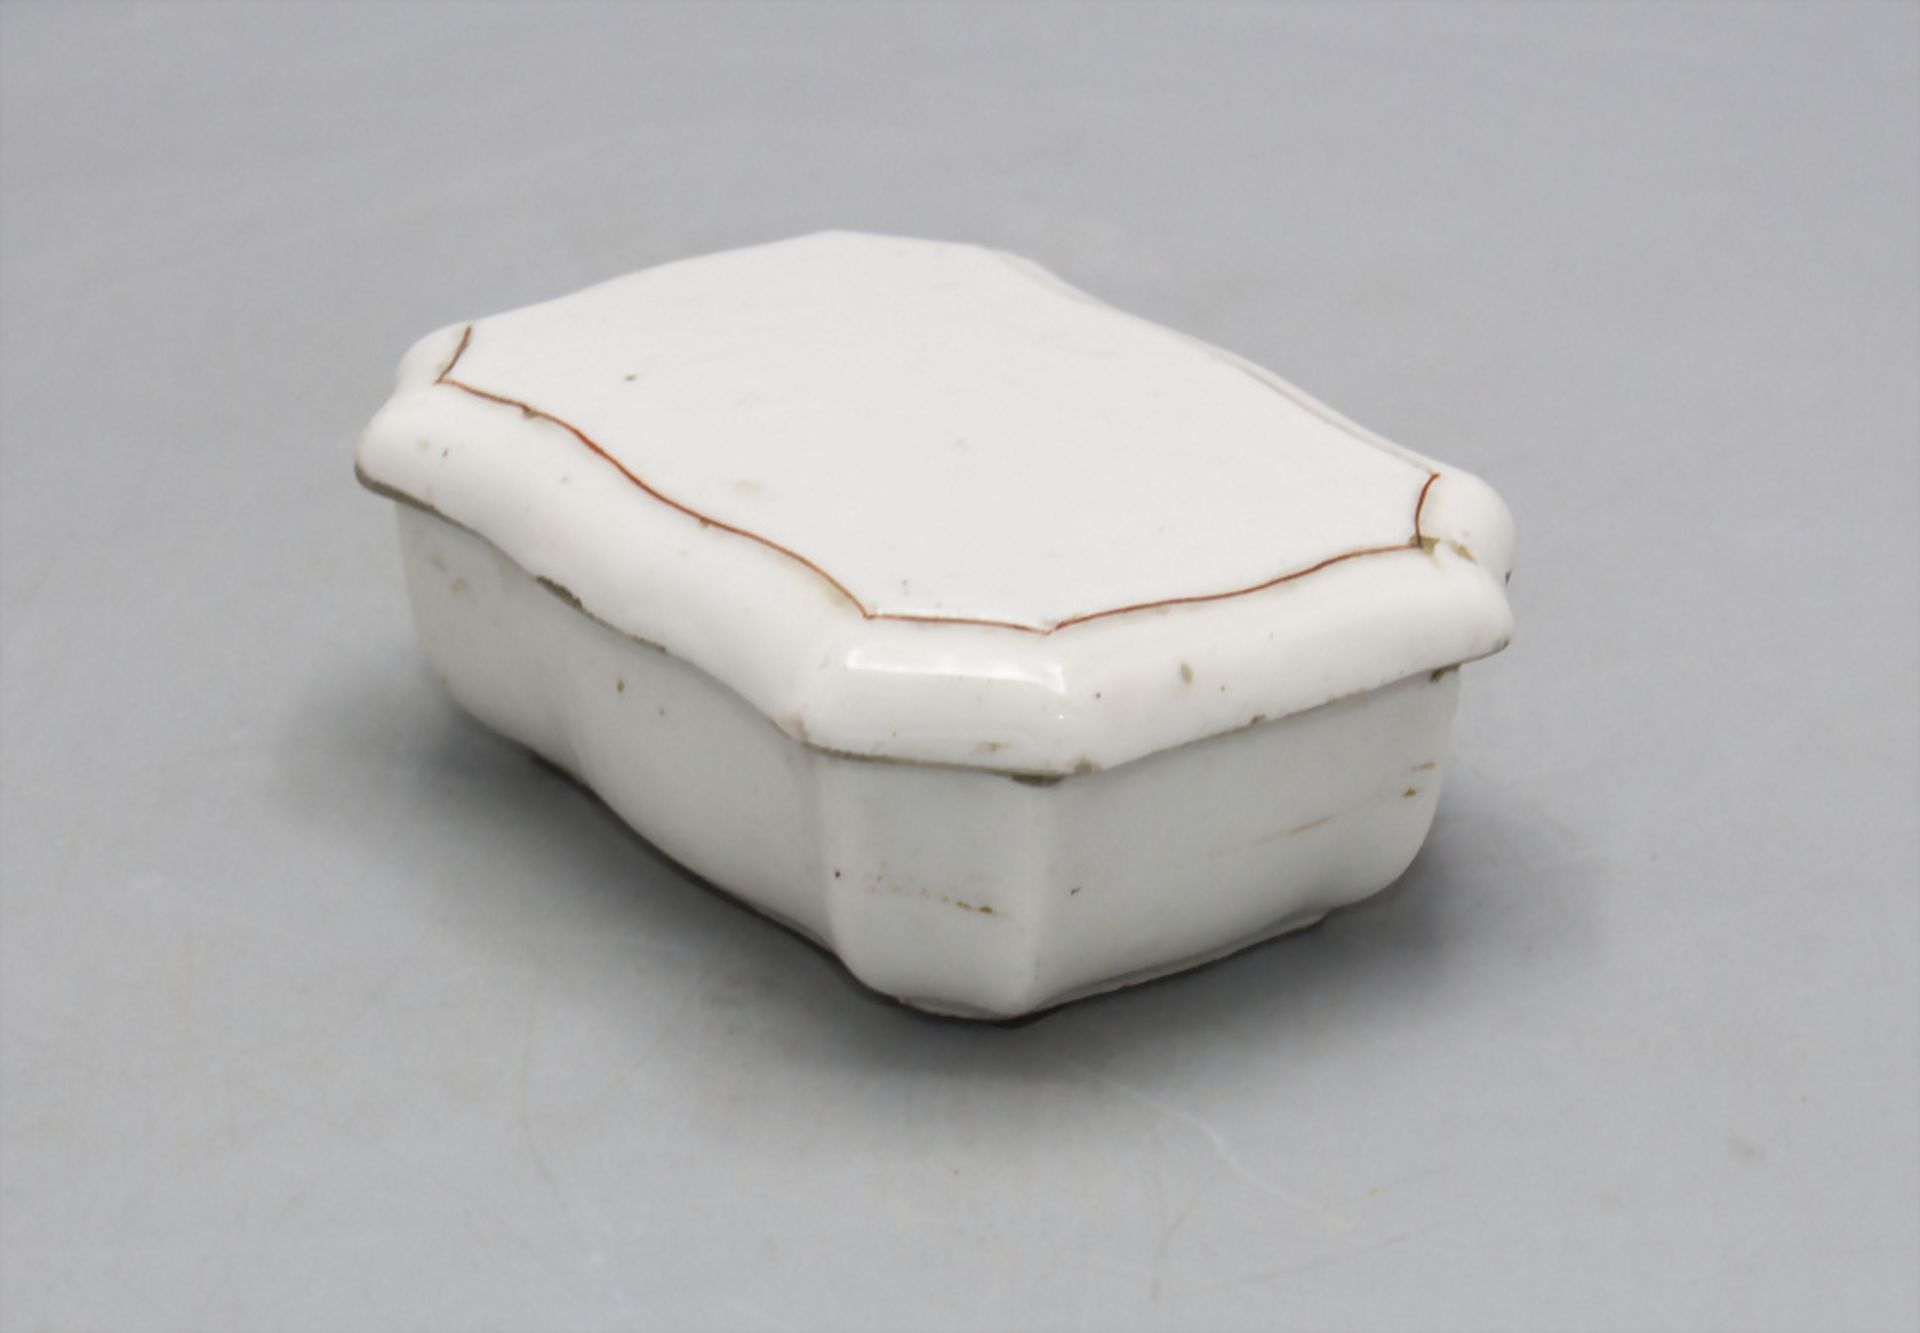 Streichholzdose / A porcelain matchbox, Fürstenberg, 18./19. Jh. - Image 3 of 4